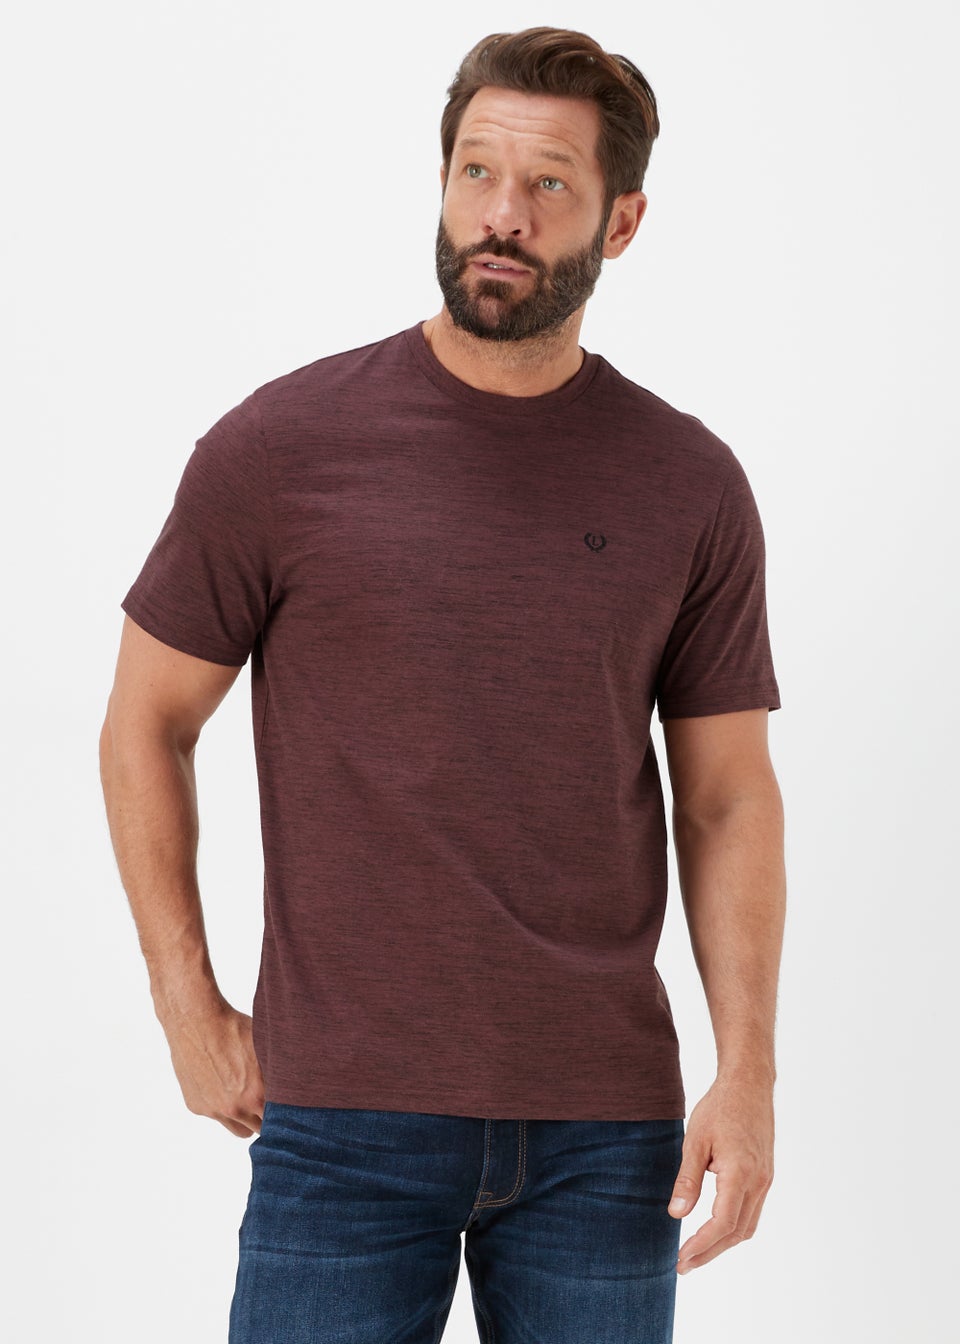 Lincoln Burgundy Space Dye T-Shirt